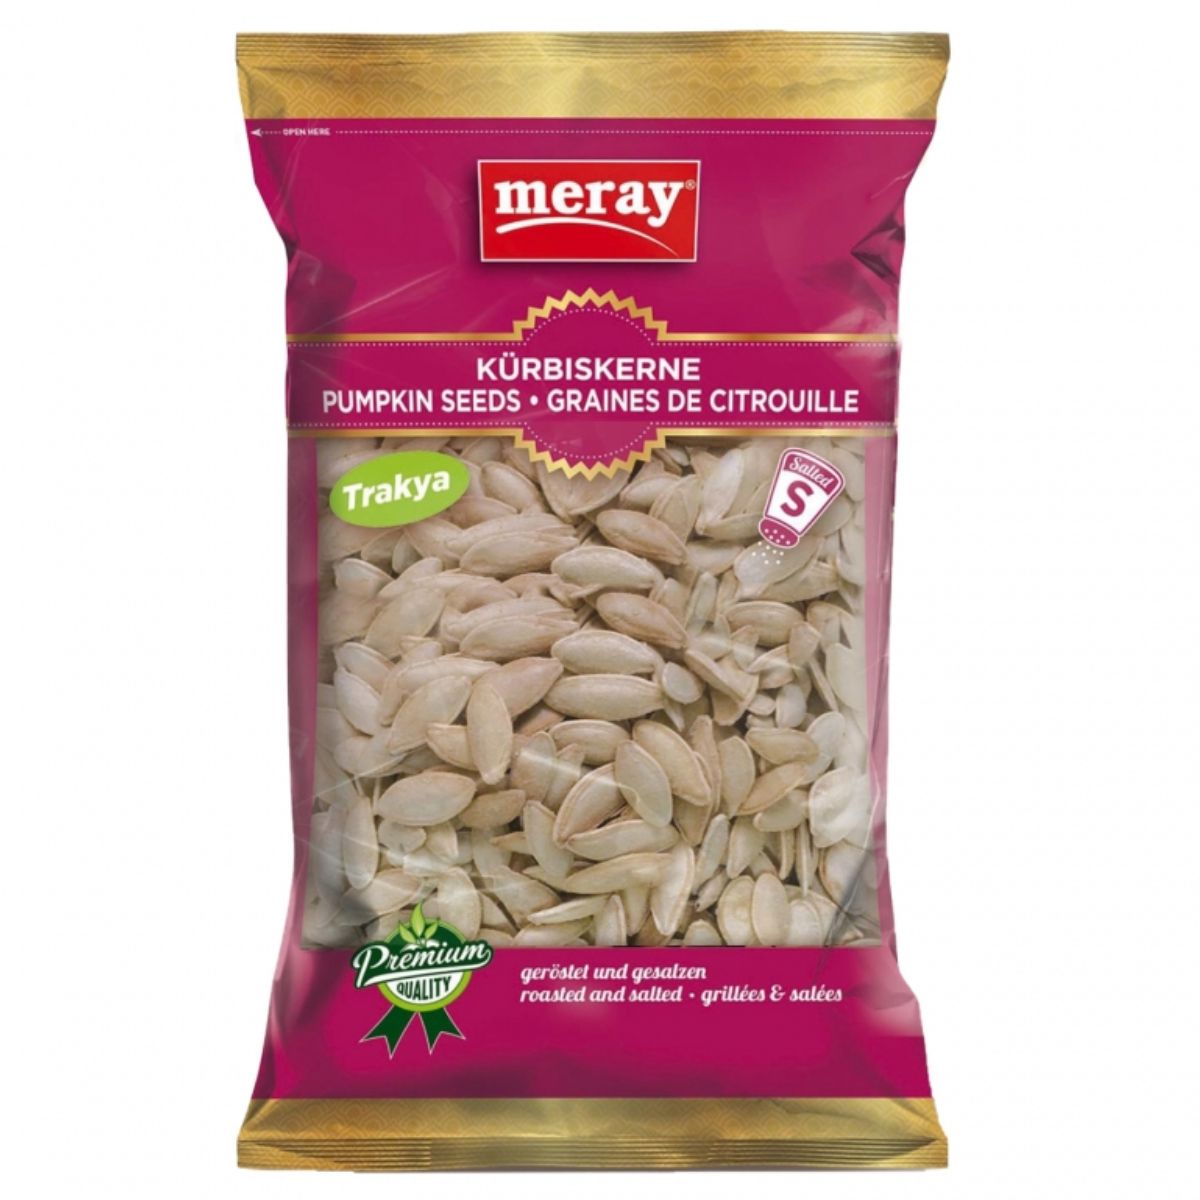 Meray - Pumpkin Seeds Roasted Salted - 200g in a bag.